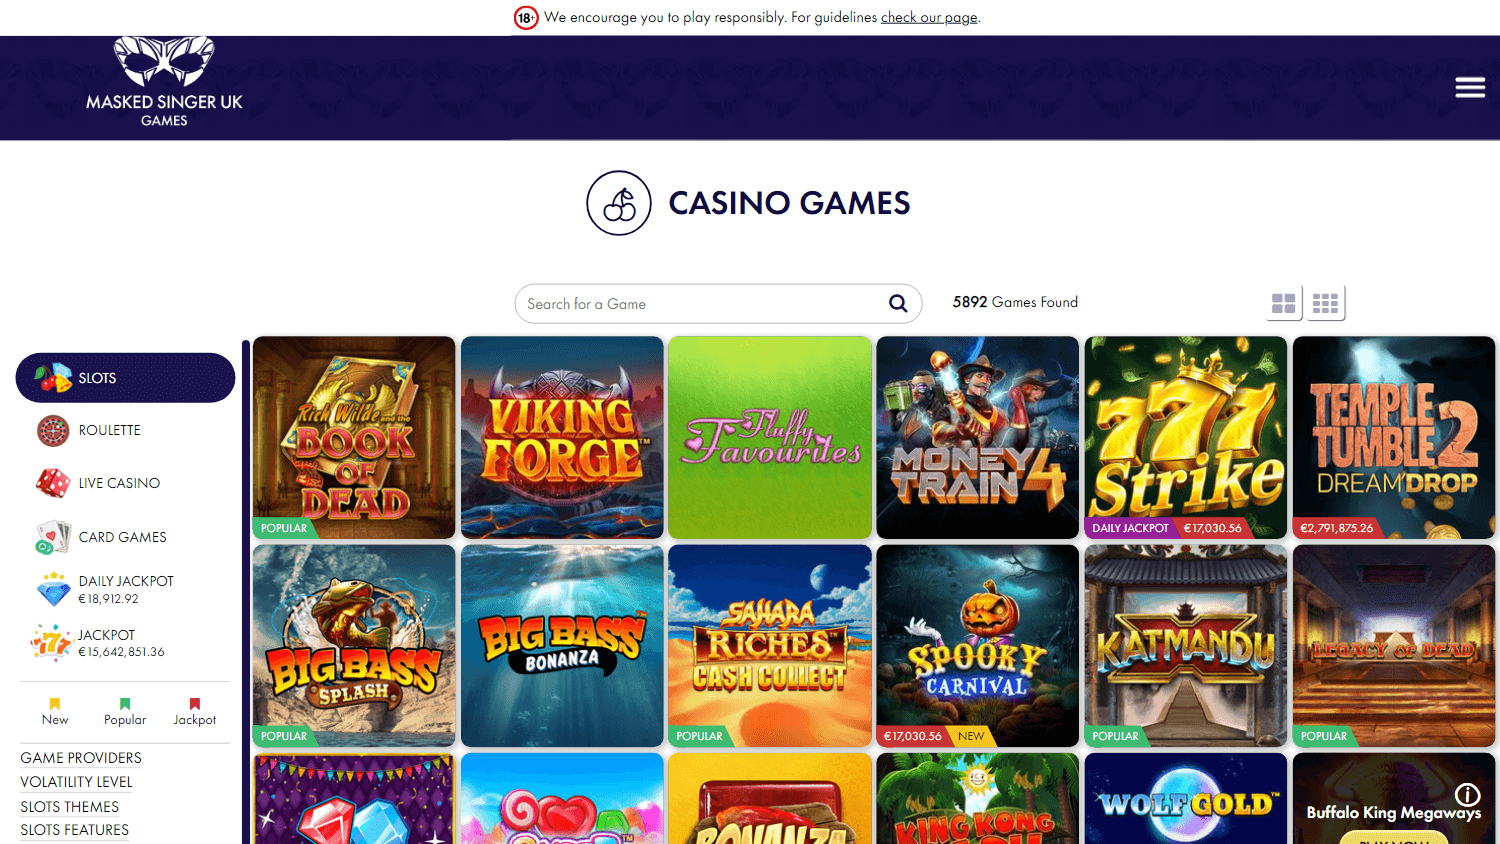 masked_singer_uk_games_casino_game_gallery_desktop